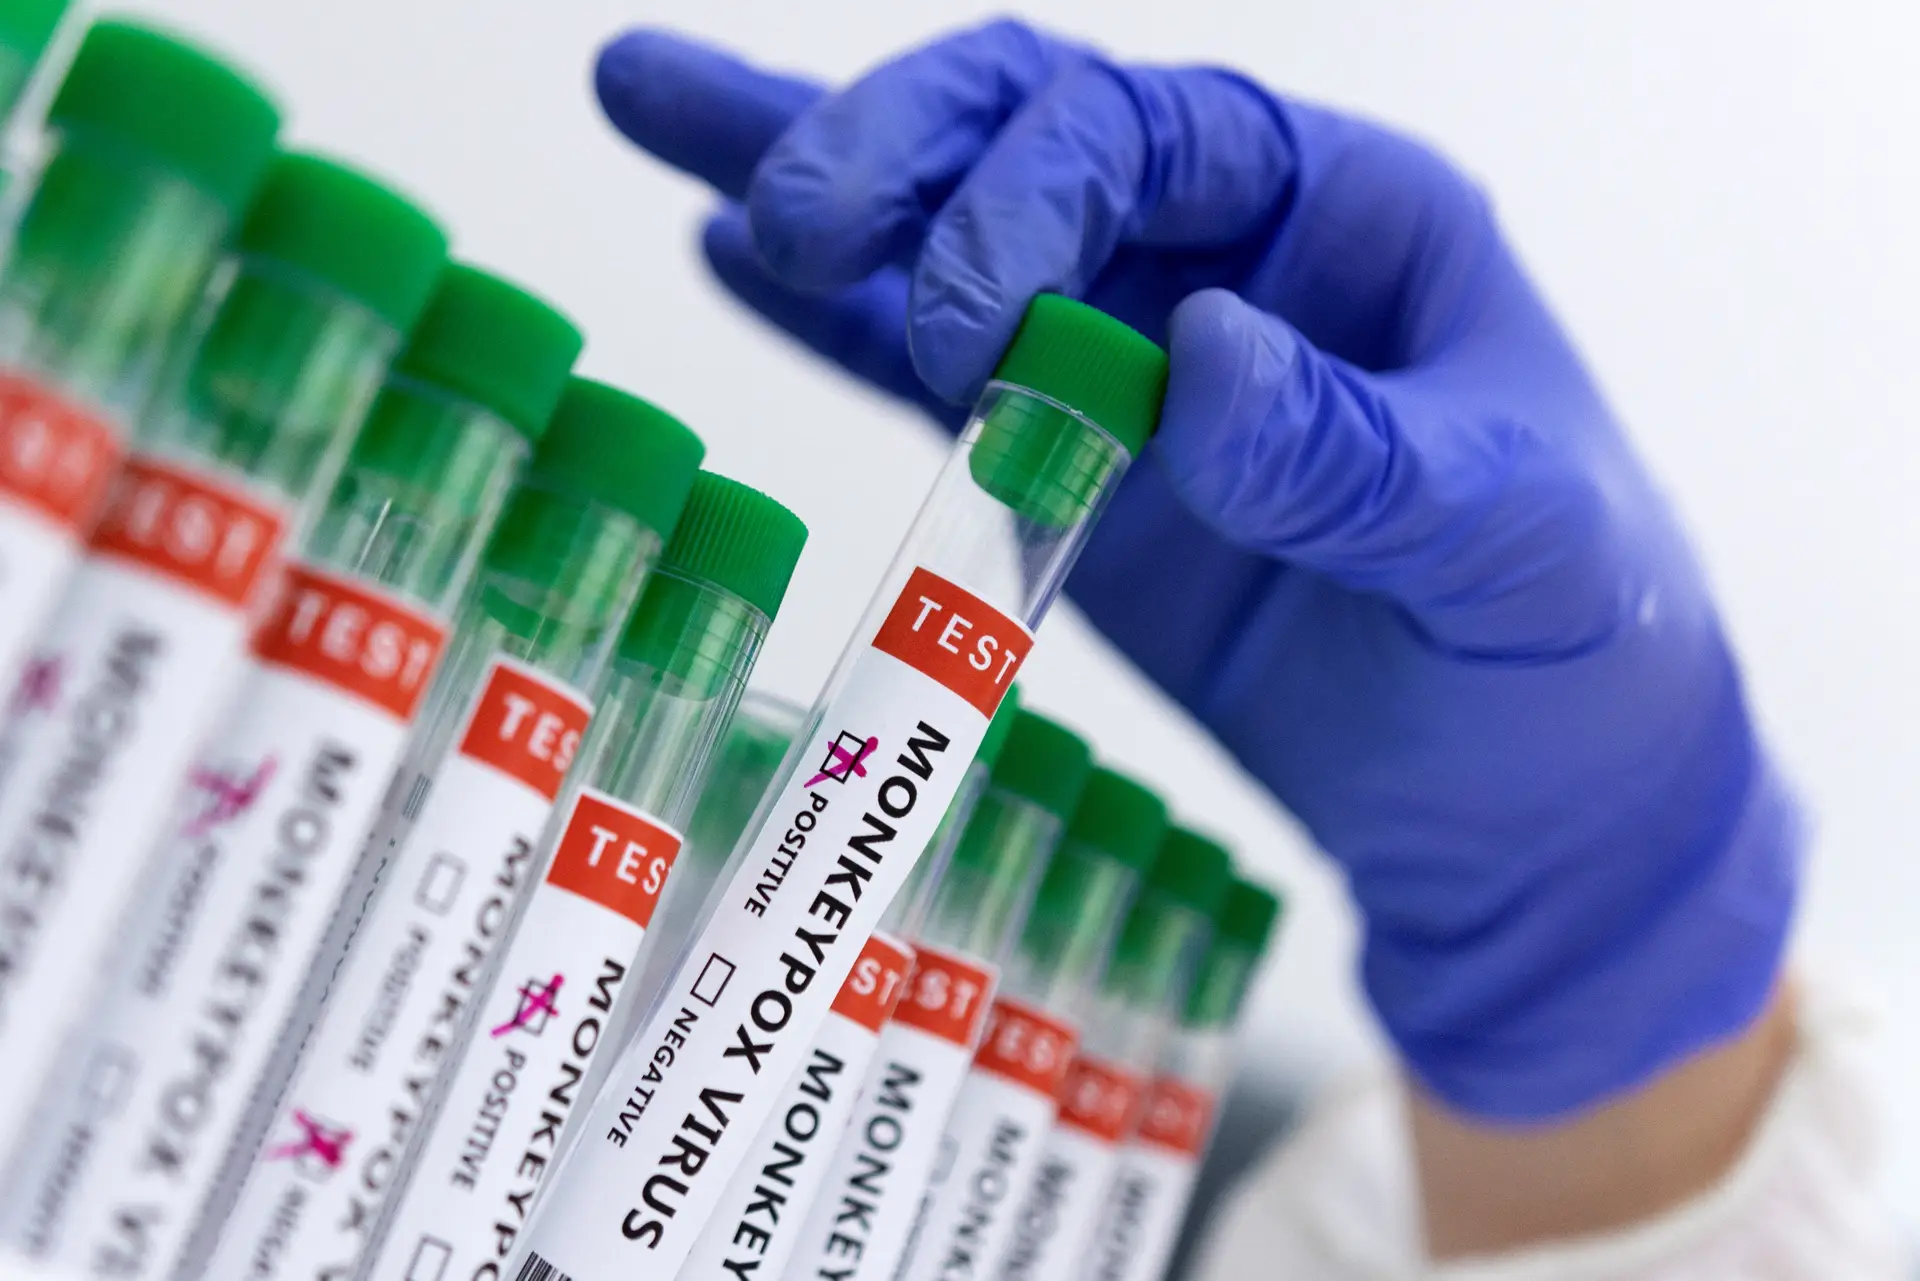 Monkeypox: UE compra mais 170 mil doses de vacinas para entregar ainda este ano